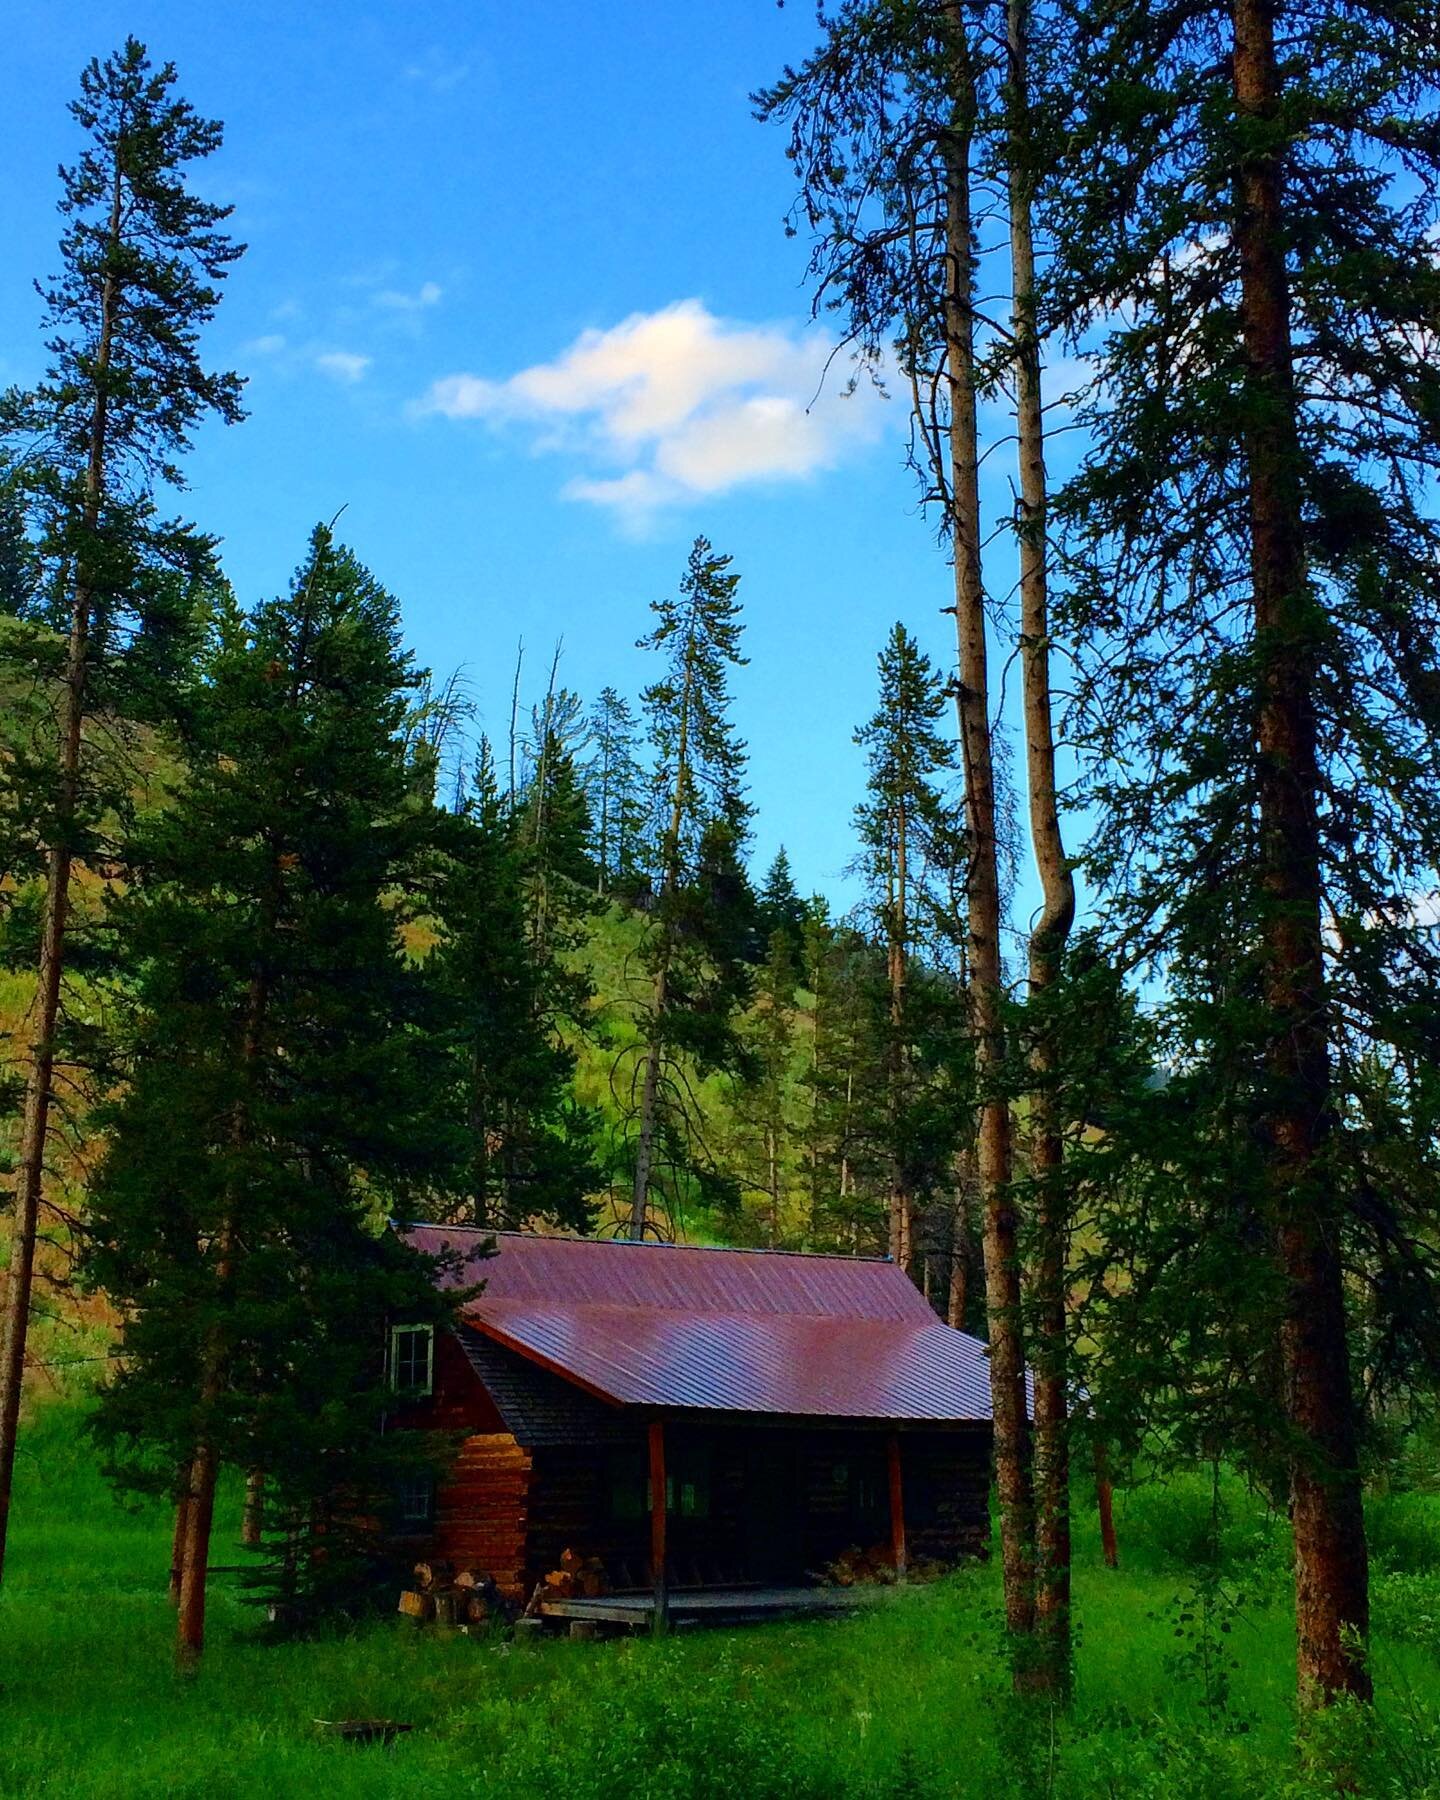 Big Sky, Montana
July, 2015
.
.
.
.
.
#bigsky #bigskycountry #bigskymontana #montana #mt #cabin #bluesky #write #writer #writing #blog #blogger #blogging #travel #traveltheworld #photo #photography #photographer #photooftheday #travelphoto #travelpho